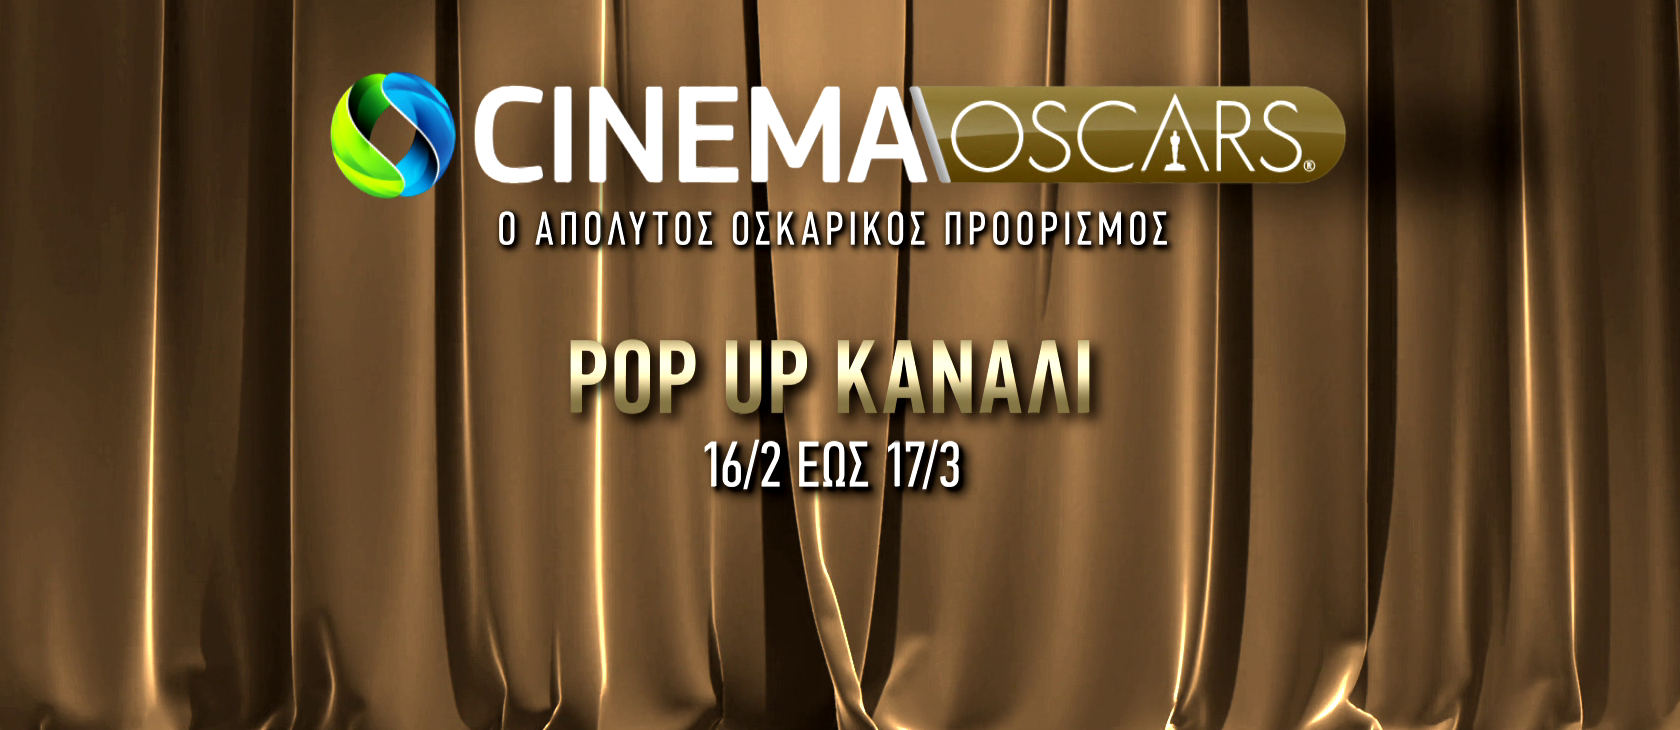 Pop-up κανάλι COSMOTE CINEMA OSCARS HD με 94 υποψήφιες ή βραβευμένες ταινίες